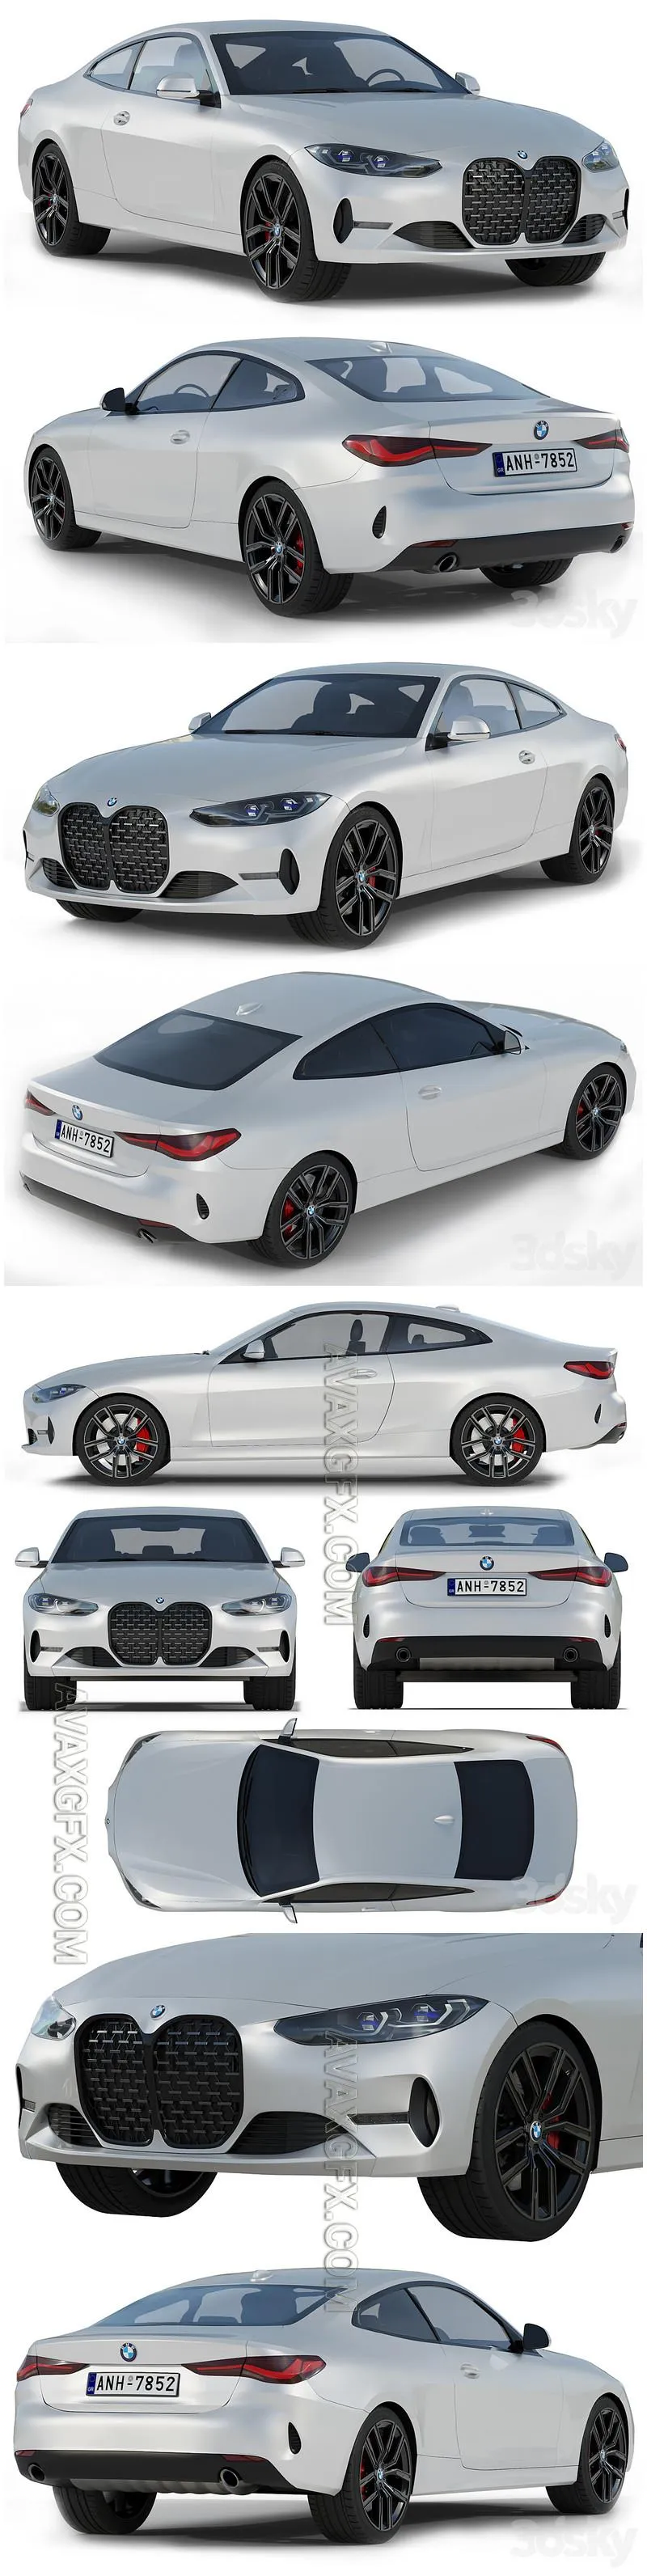 BMW 4 Series G22 2020 - 3D Model